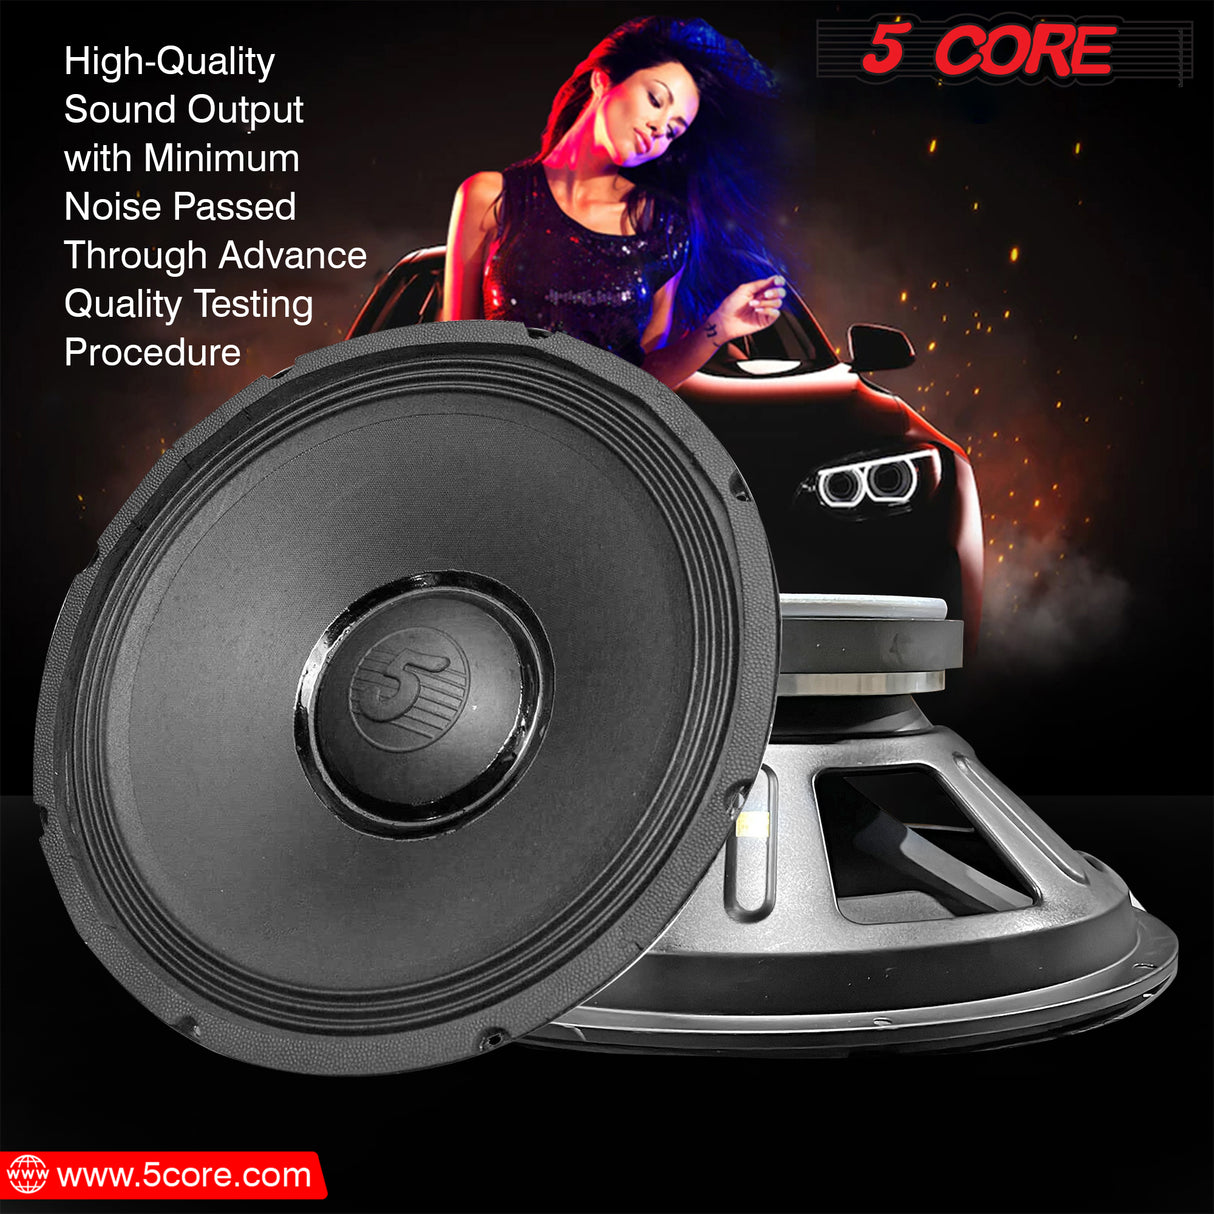 15 inch Subwoofer Replacement PRO DJ Speaker Sub Woofer Loudspeaker Wide Full Range Loud 250 Watts RMS (2200W PMPO) 185MM Magnet 5 Core 15-185 MS 250W